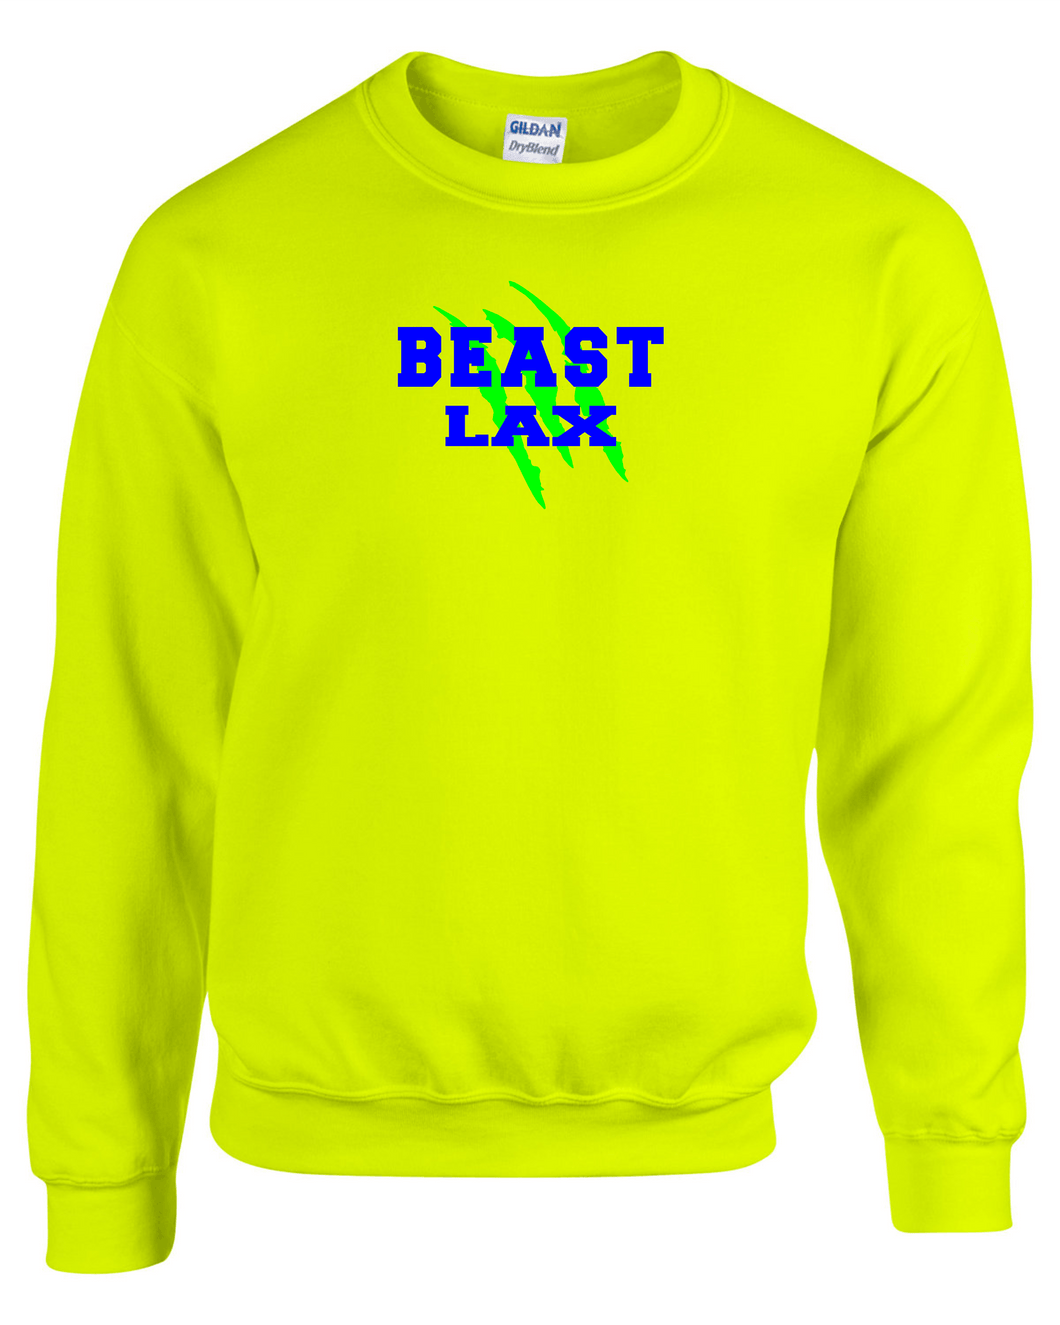 BEAST-LAX-304-2 - Gildan Adult Heavy Blend™ 50/50 Fleece Crew - BEAST LAX Logo